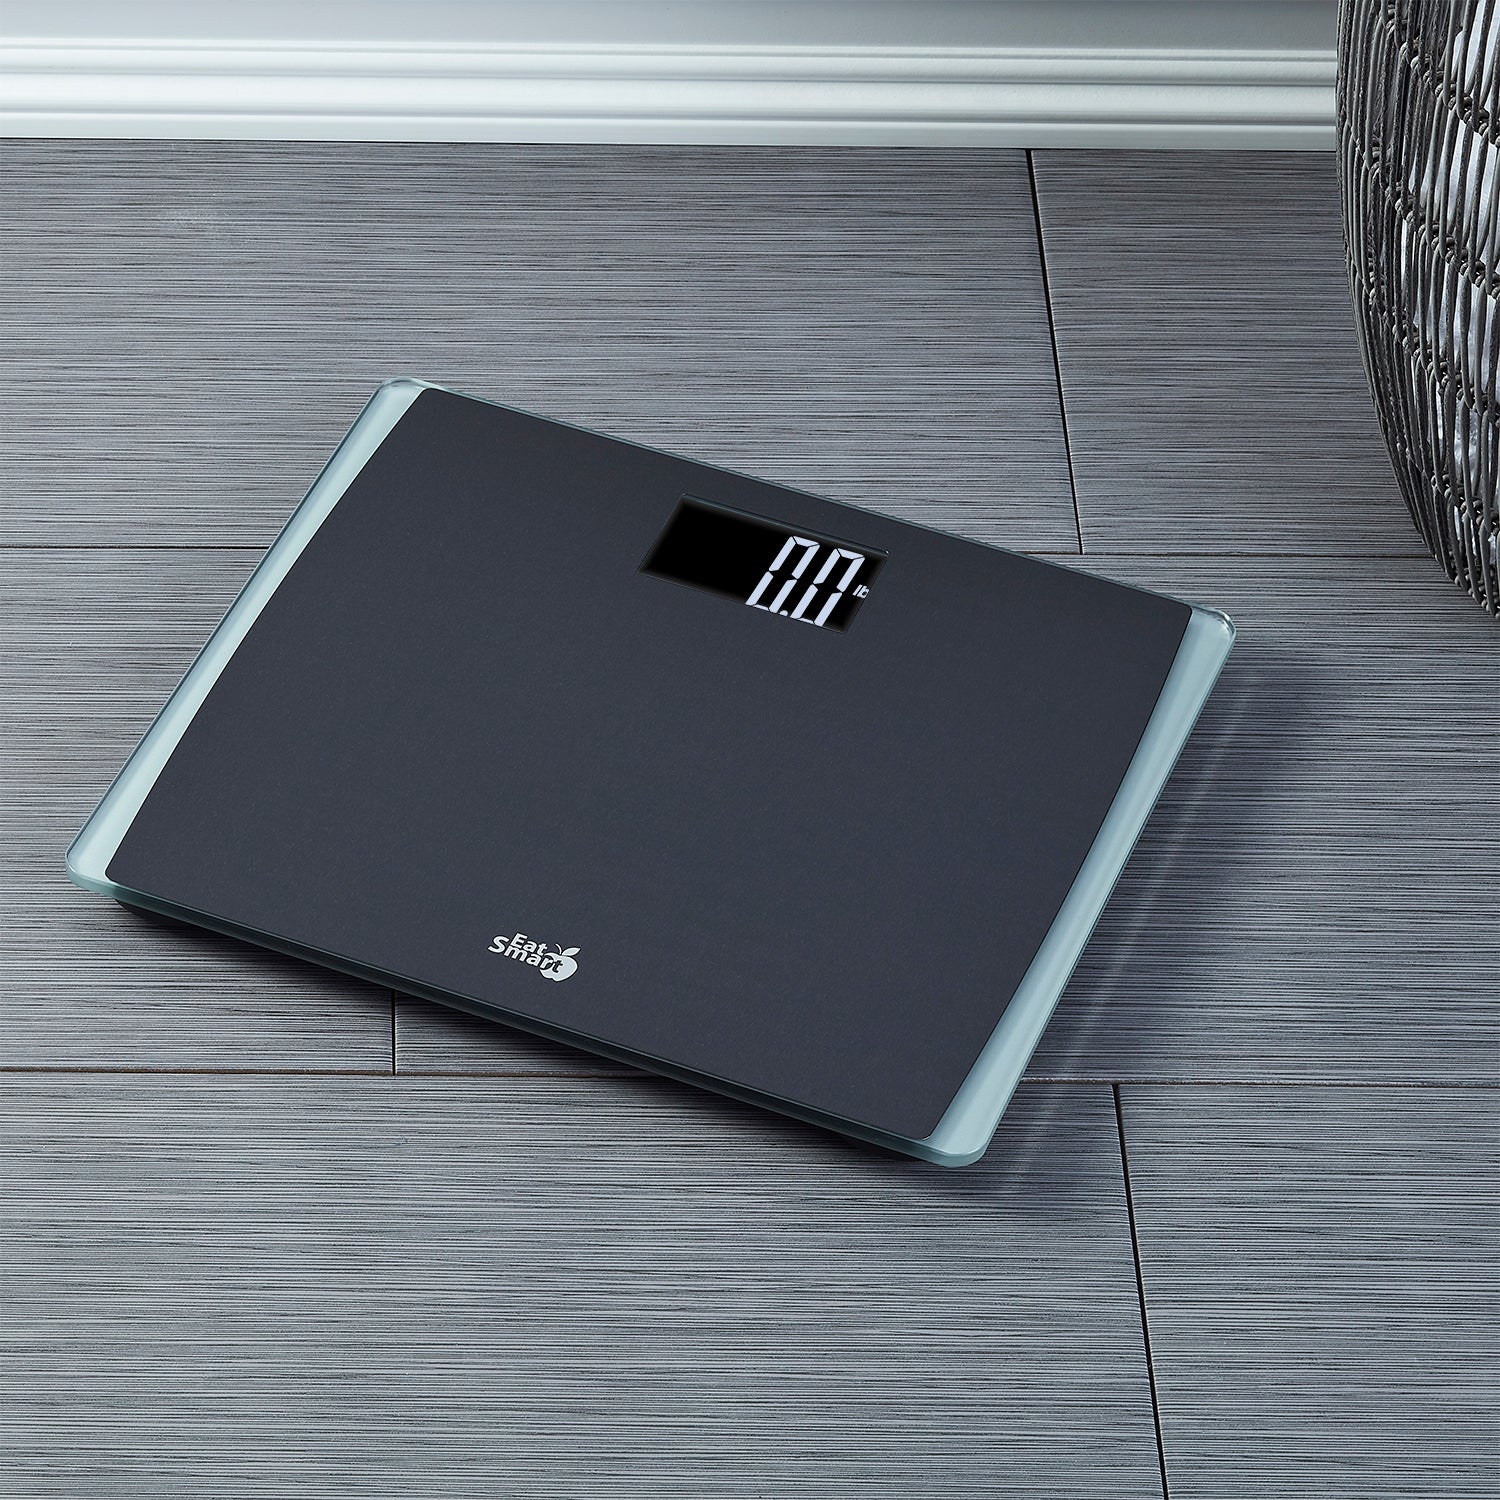 Eat Smart Precision Digital Bathroom Scale, 550 lb High Capacity